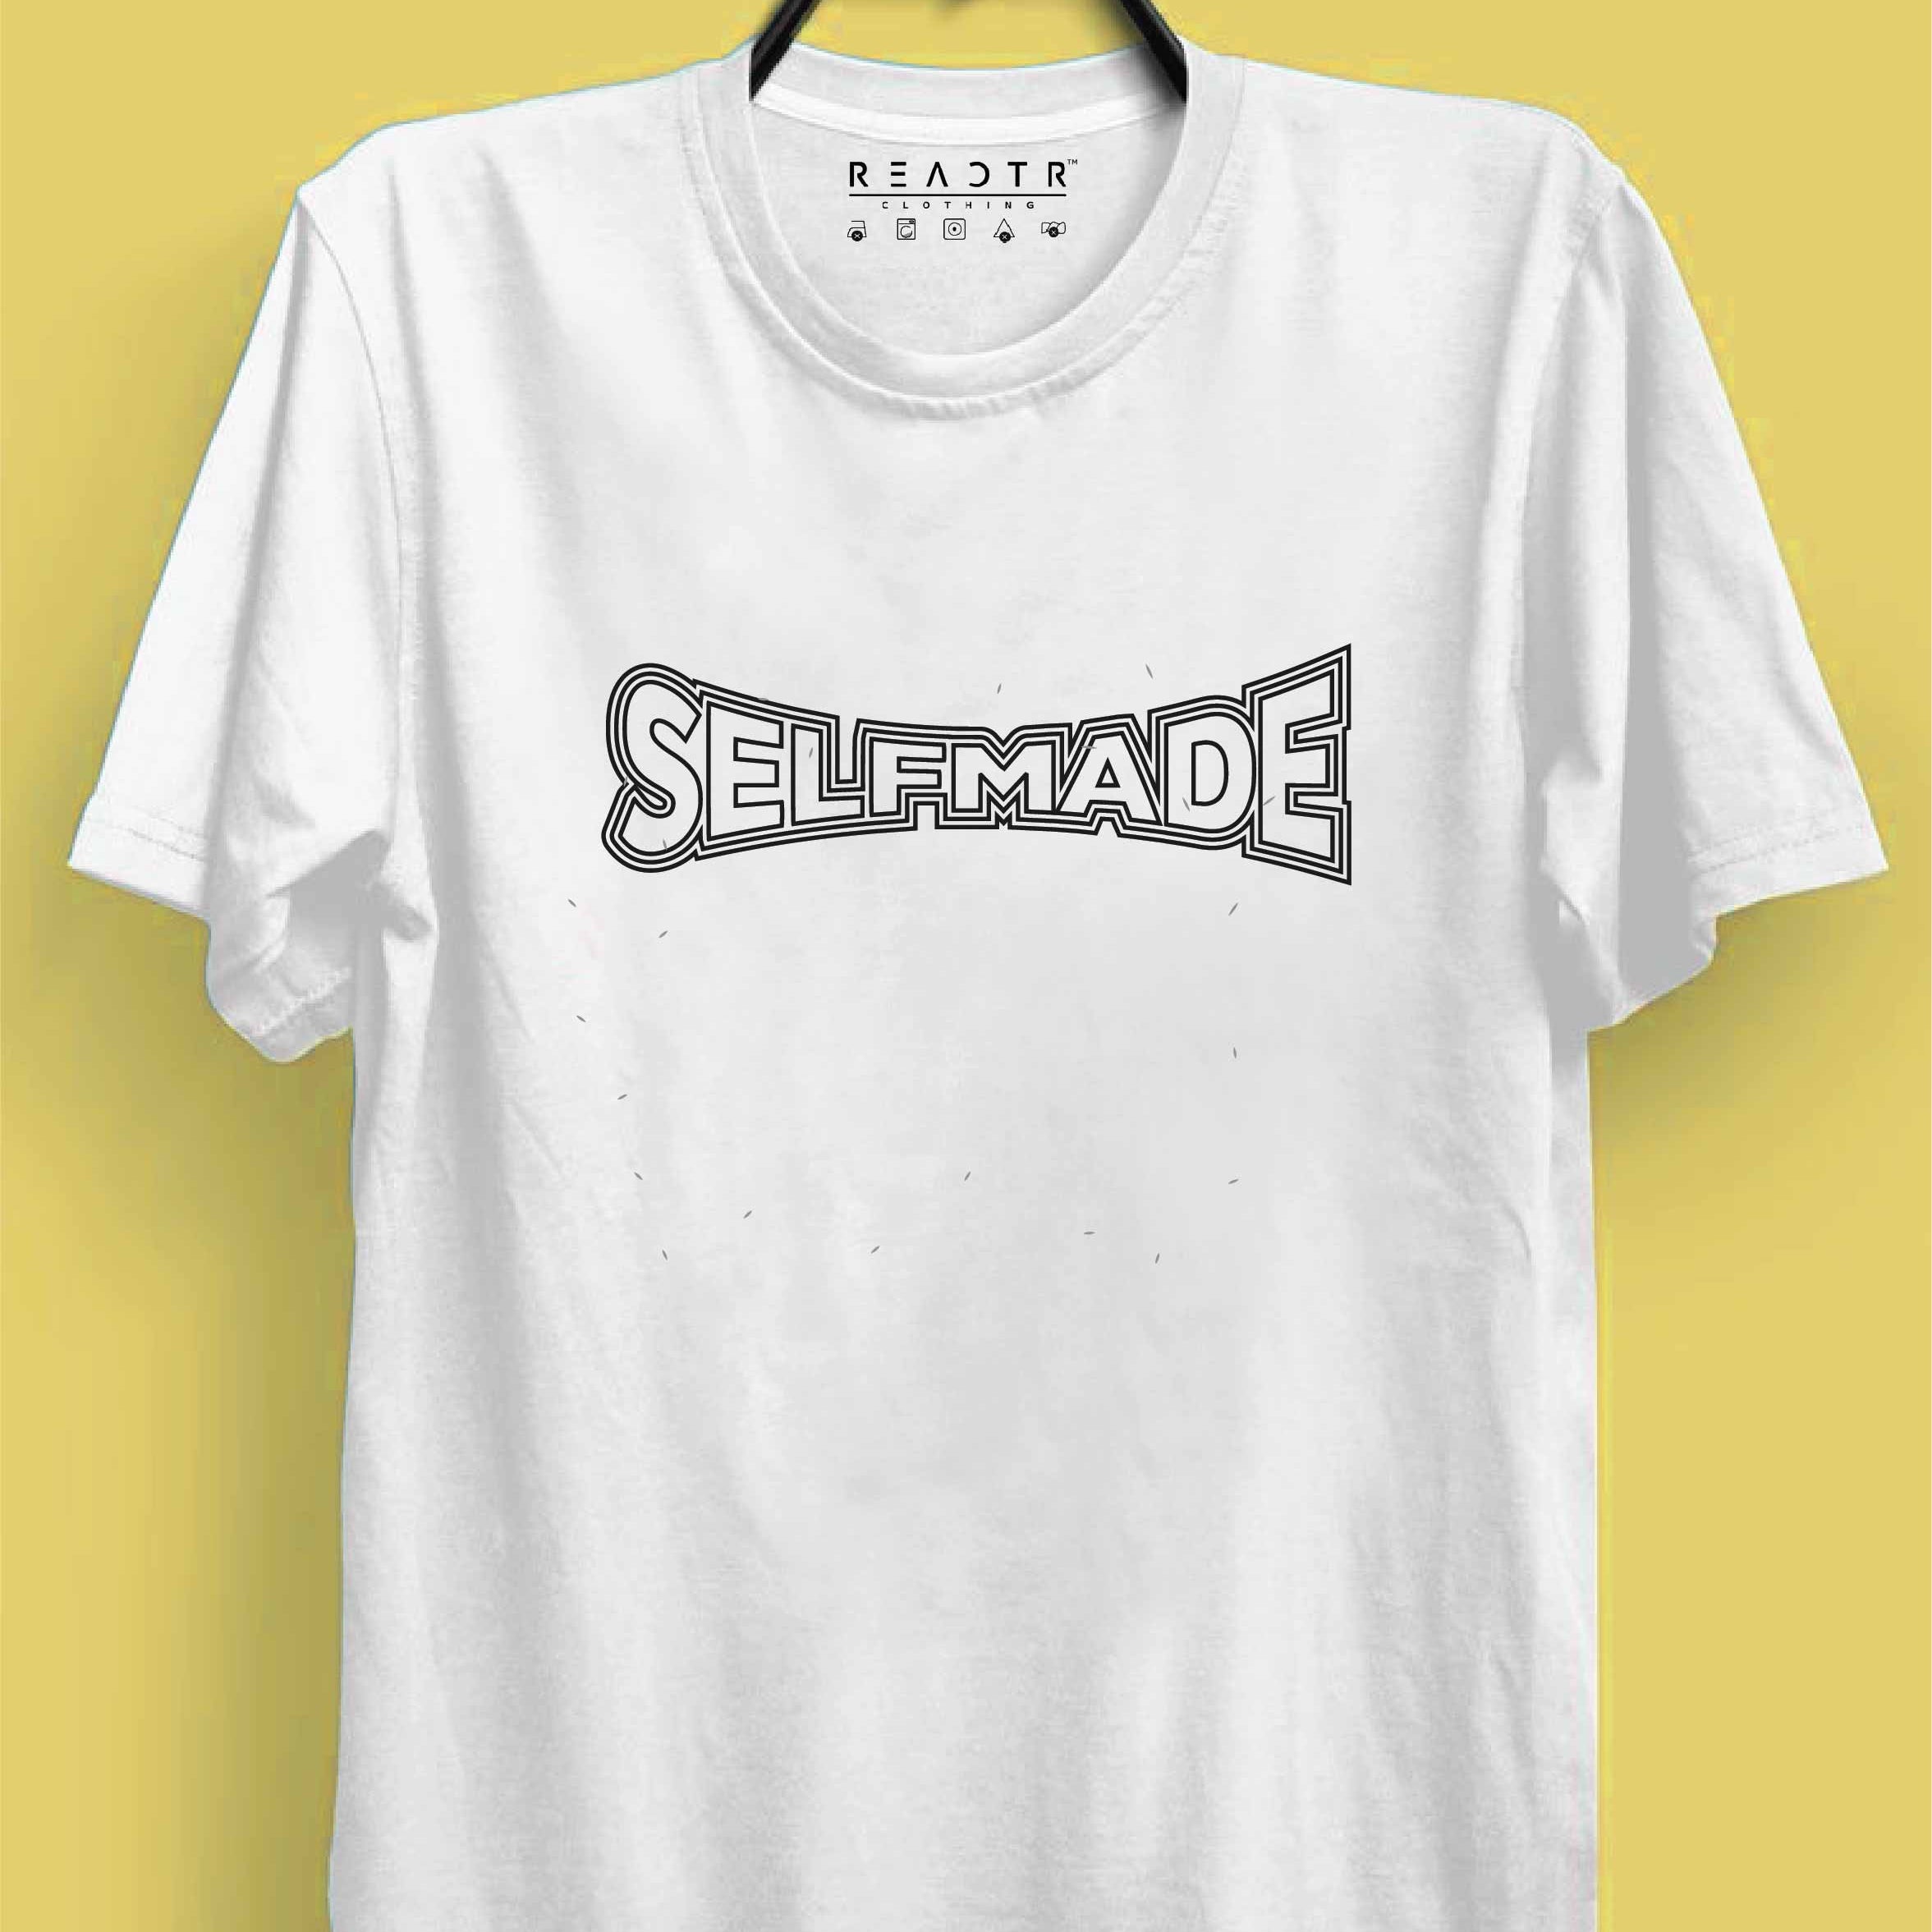 Selfmade Reactr Tshirts For Men - Eyewearlabs